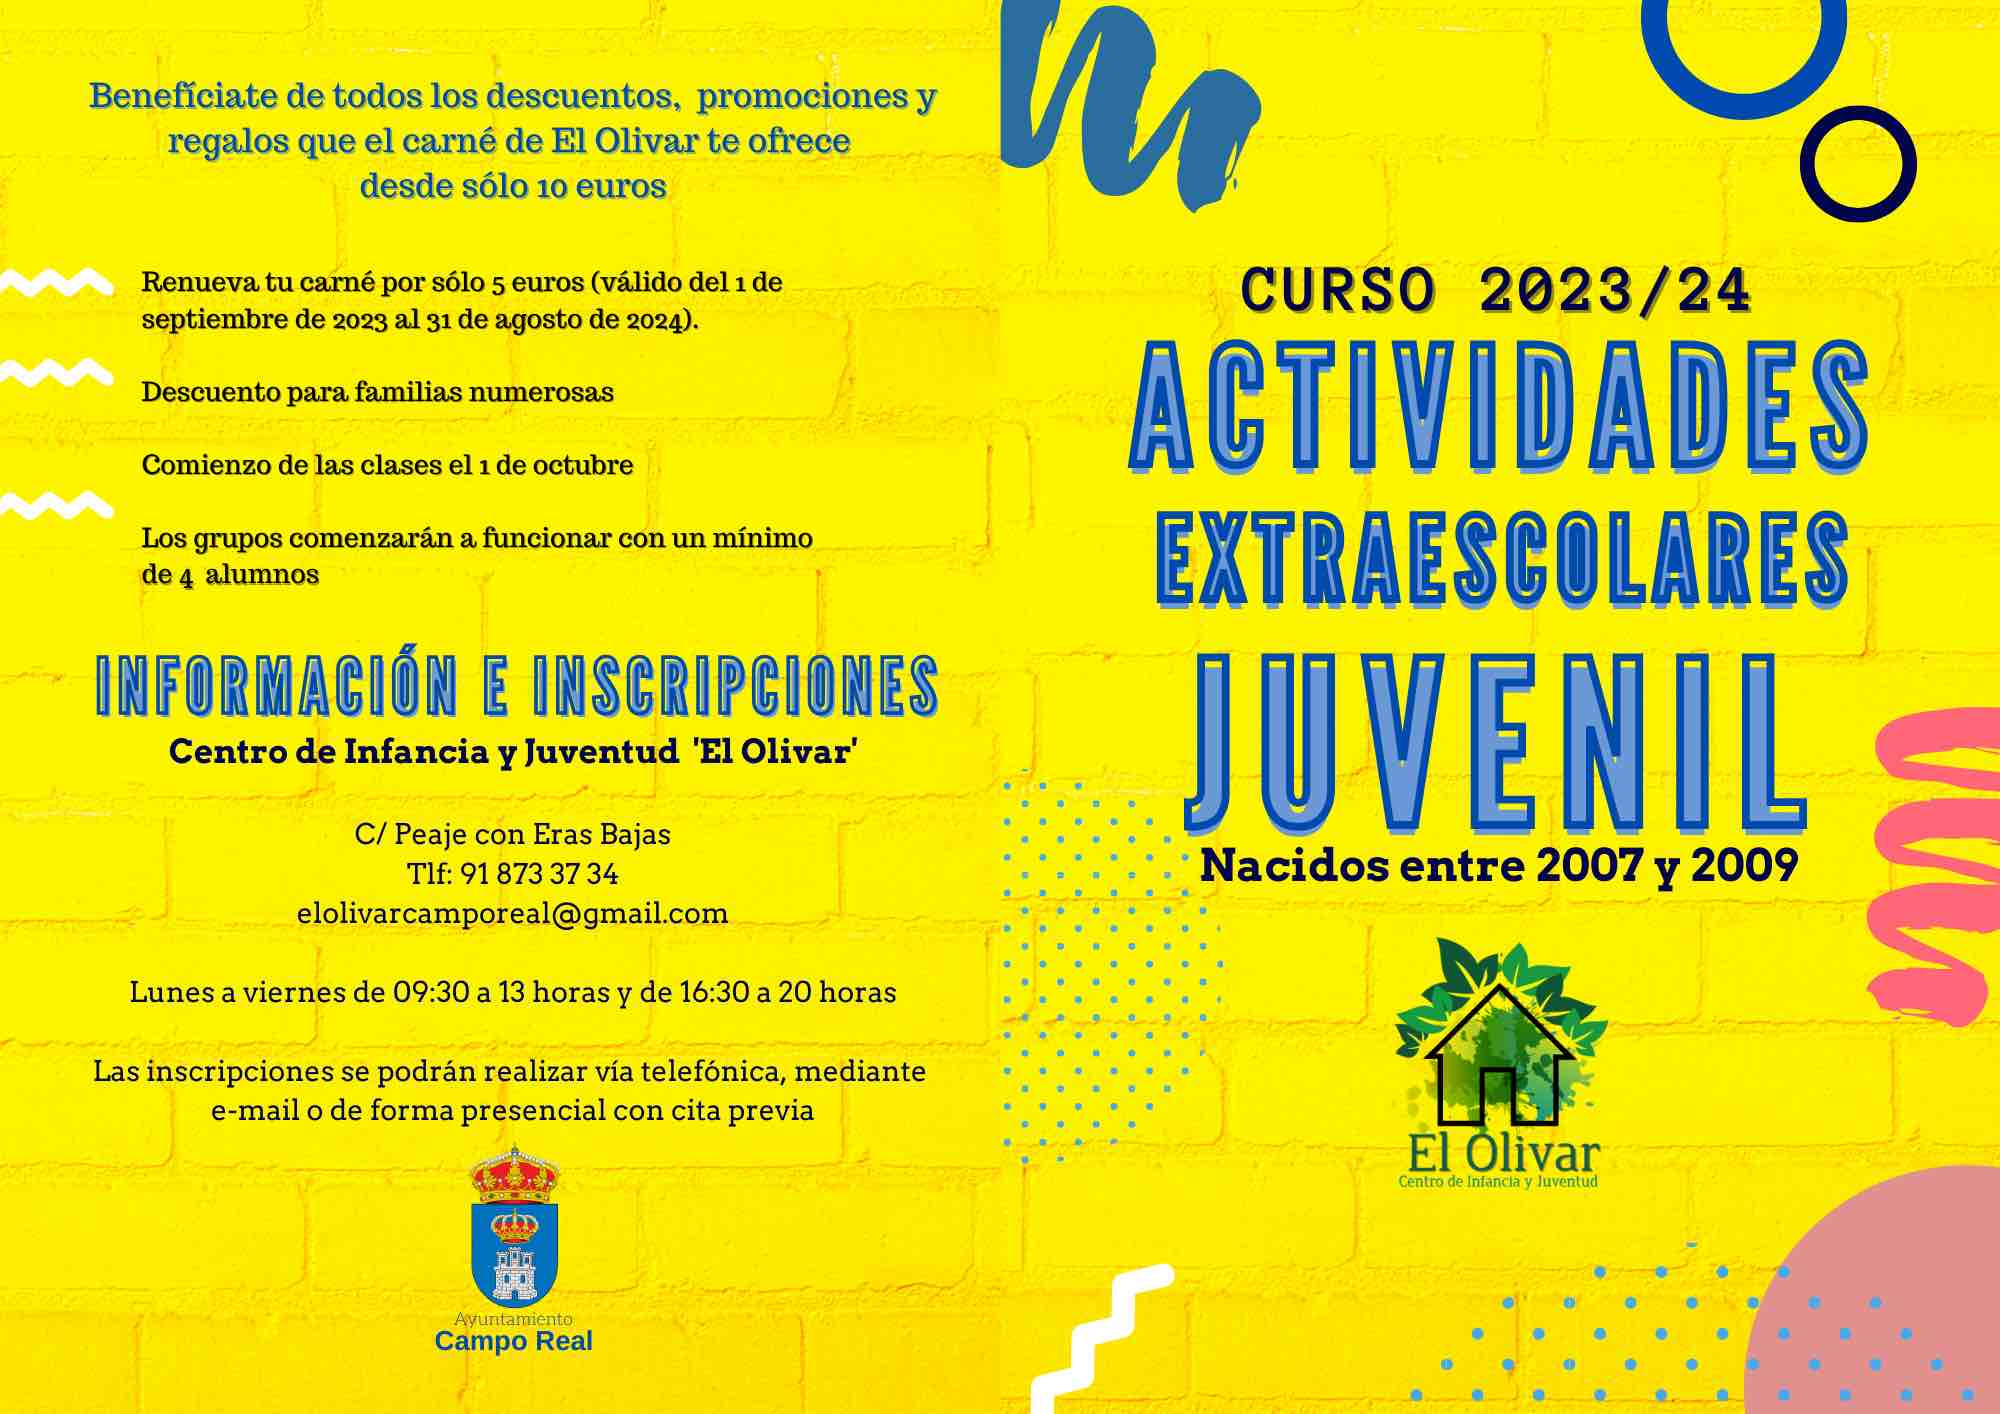 Actividades_Juveniles_de_El_Olivar_curso_202223_1.jpg - 172.47 kB